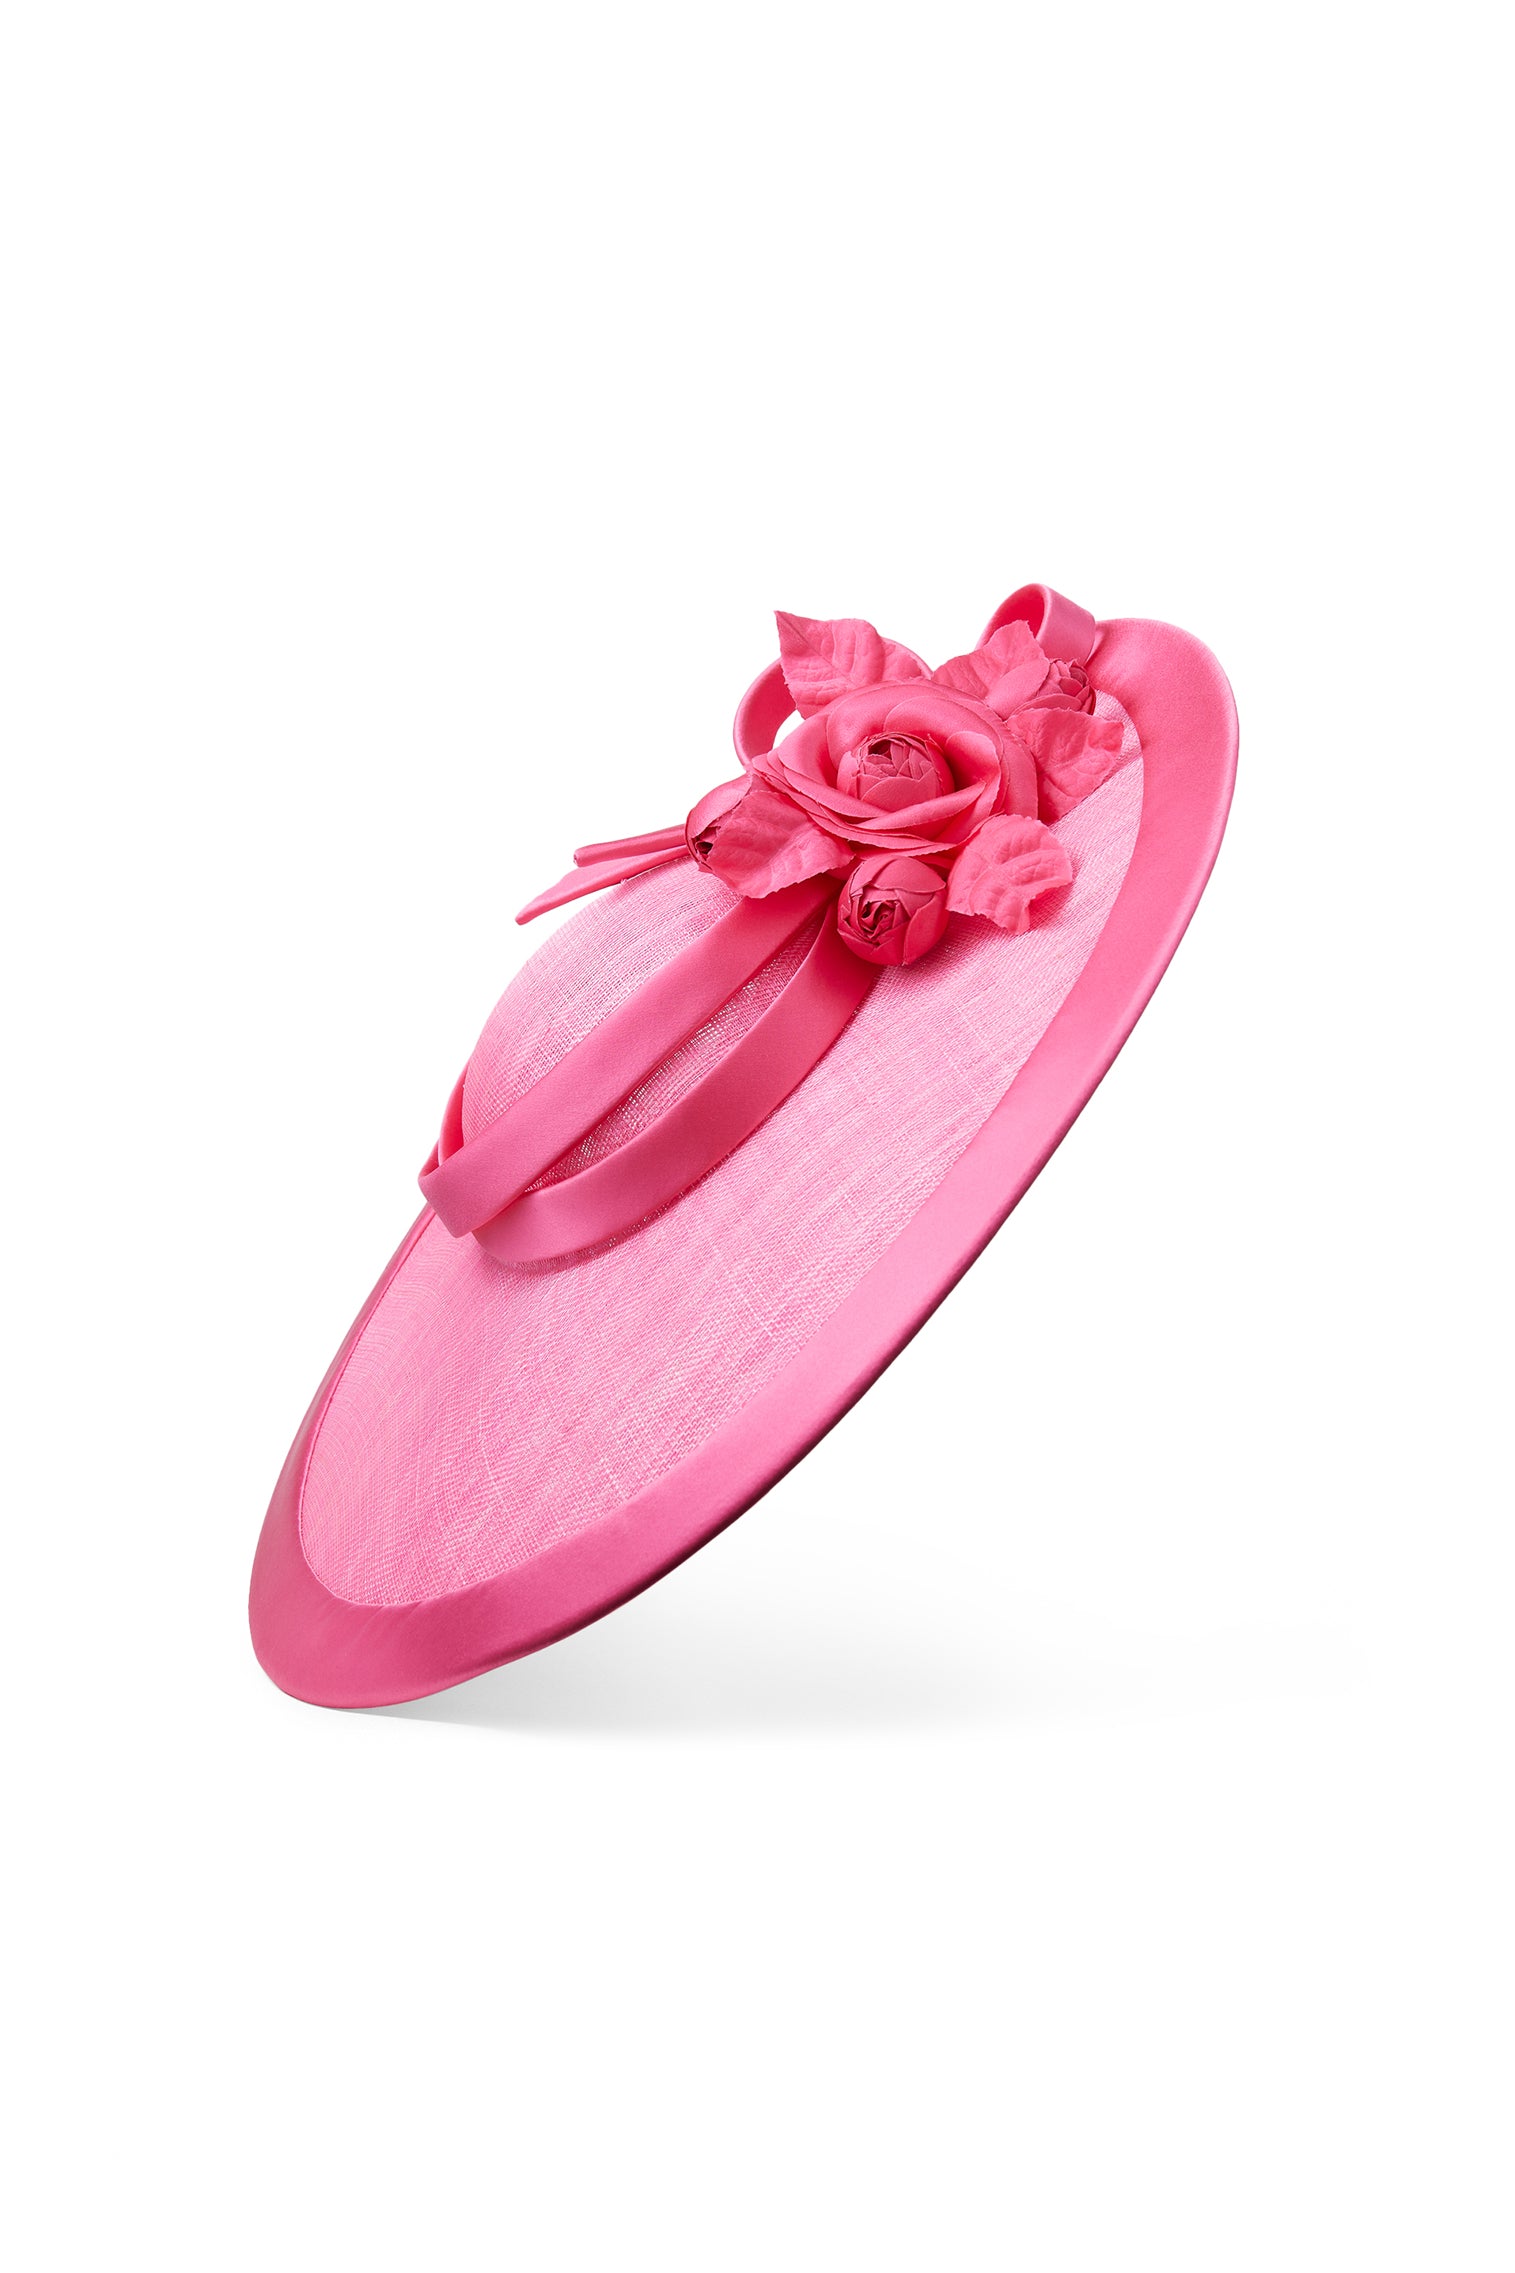 Jasmine Bright Pink Slice Hat - Grand National Hats - Lock & Co. Hatters London UK